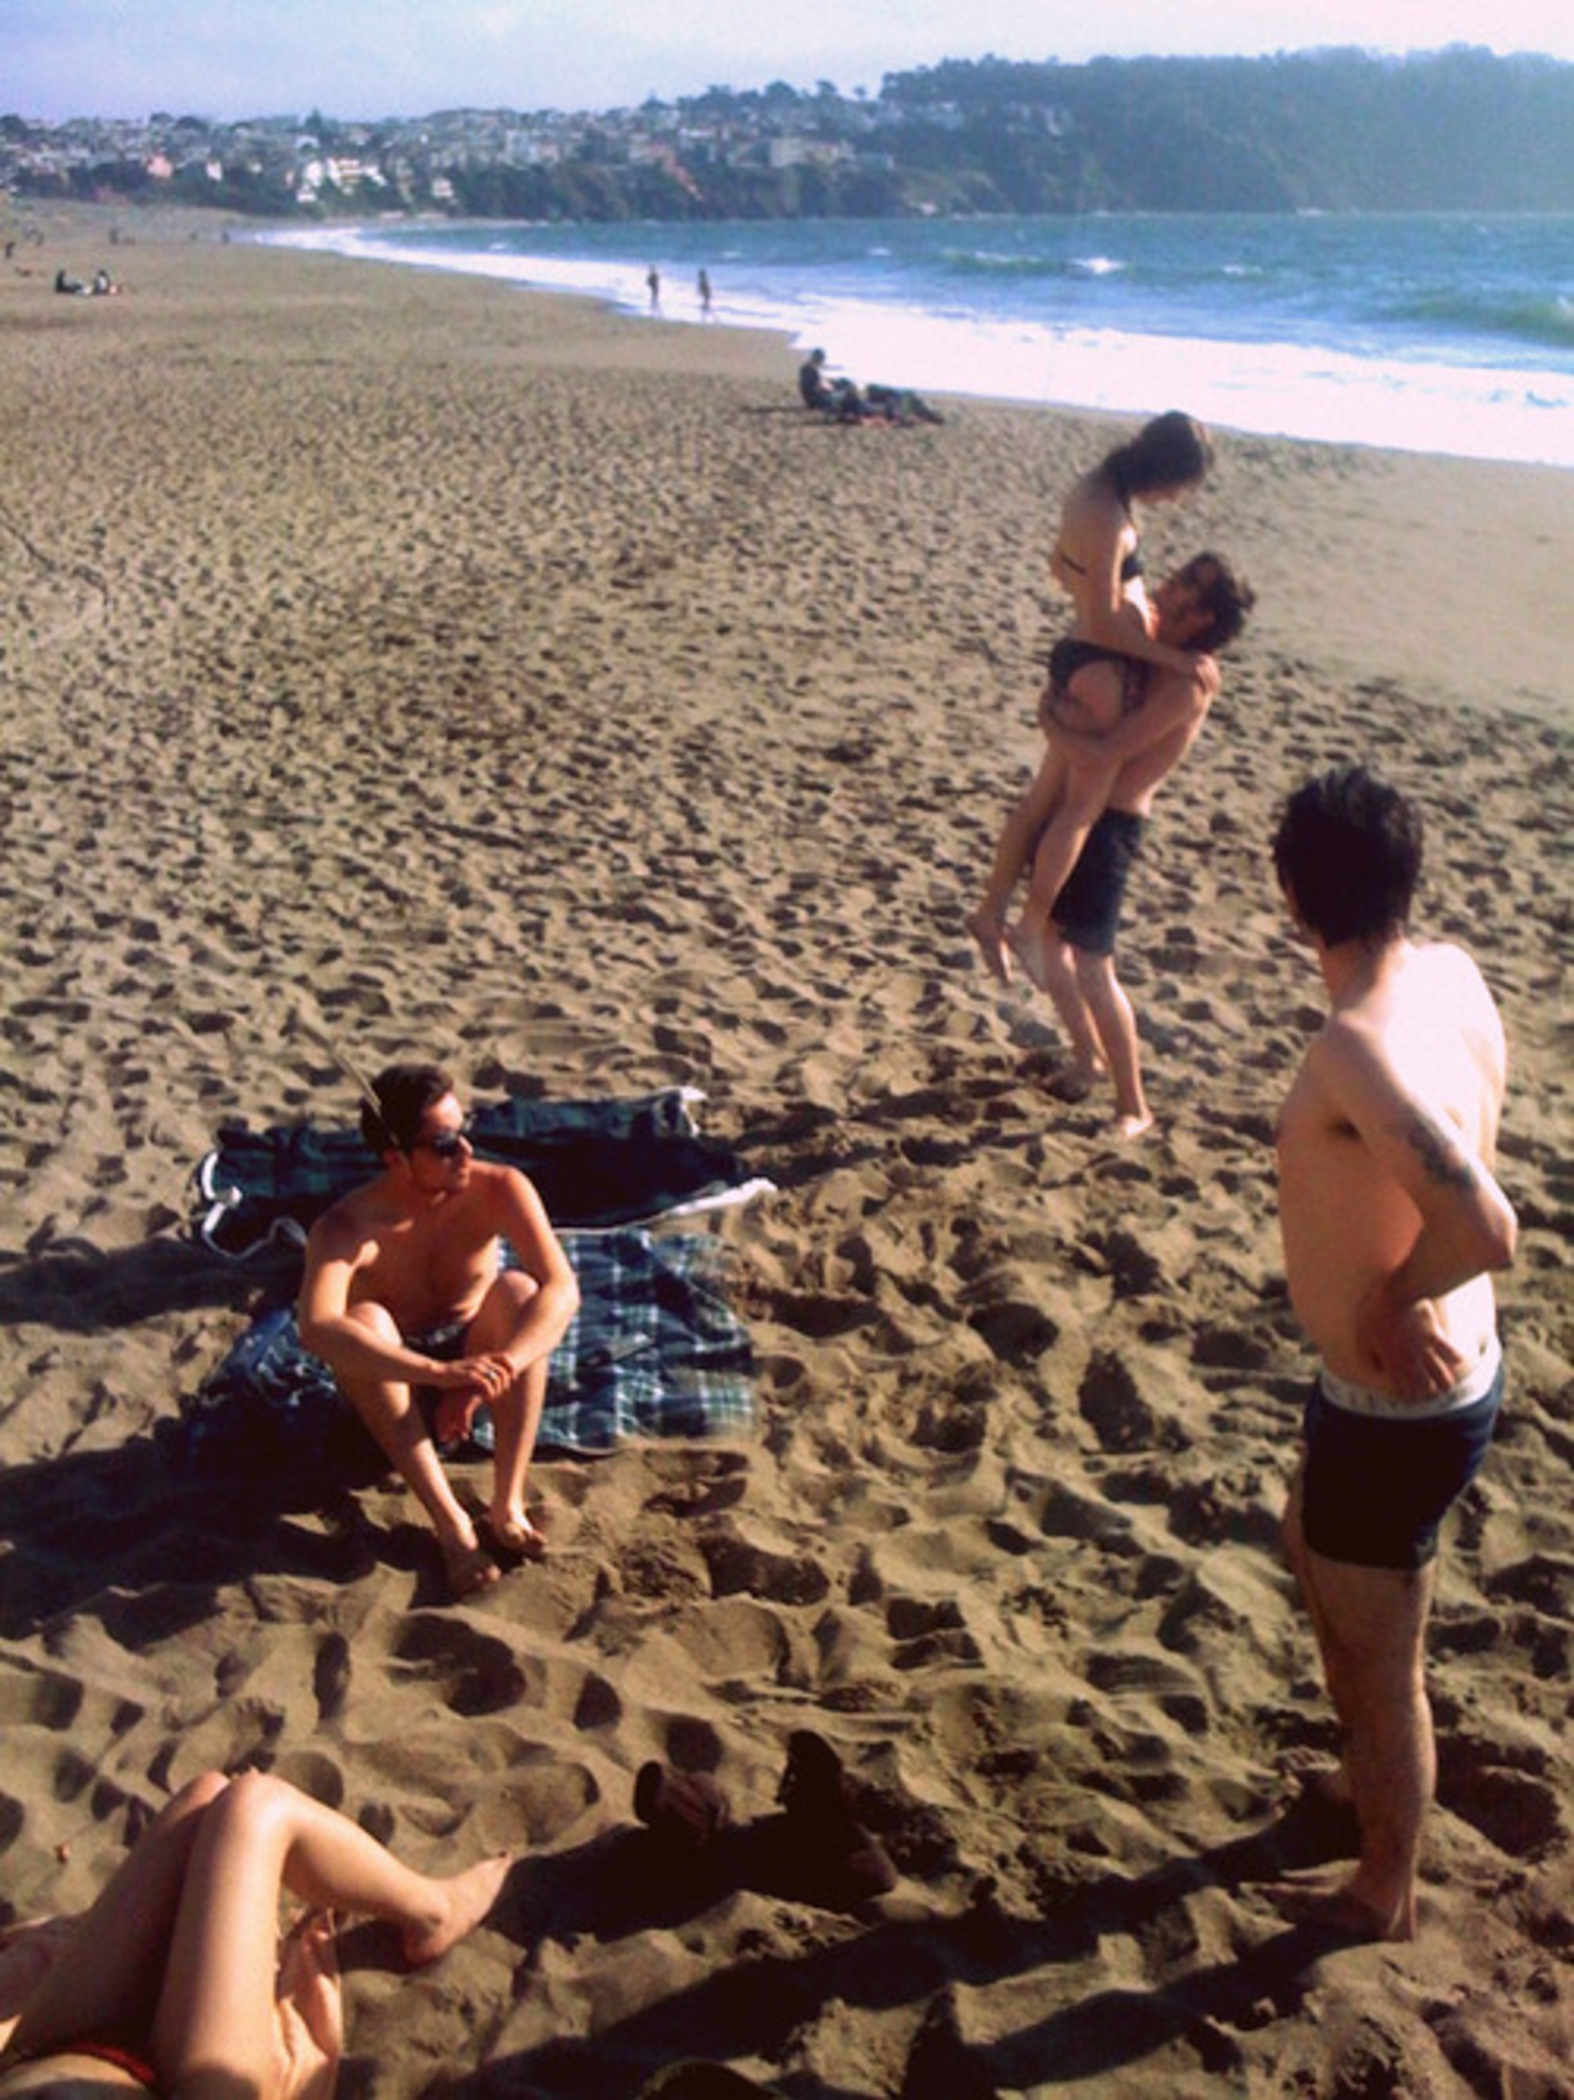 dean hofer share nude beach pictures tumblr photos